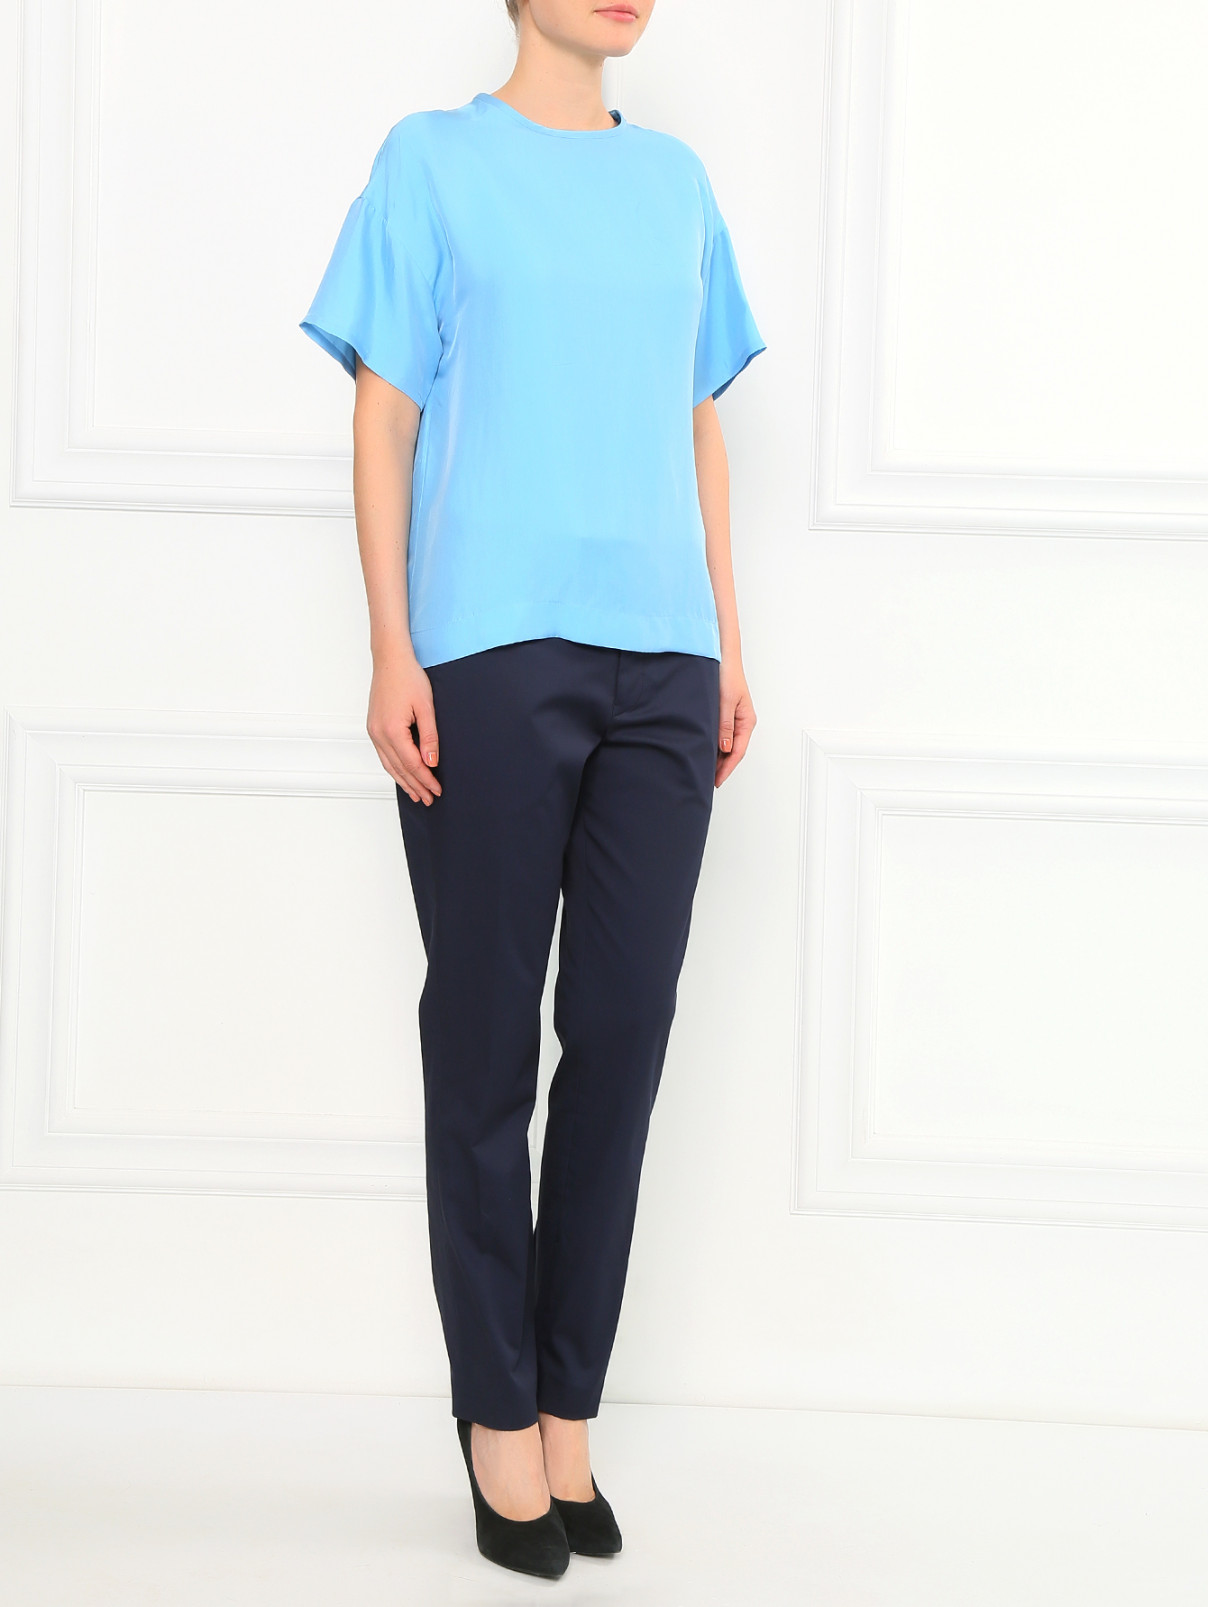 Блуза из шелка свободного кроя Jil Sander  –  Модель Общий вид  – Цвет:  Синий